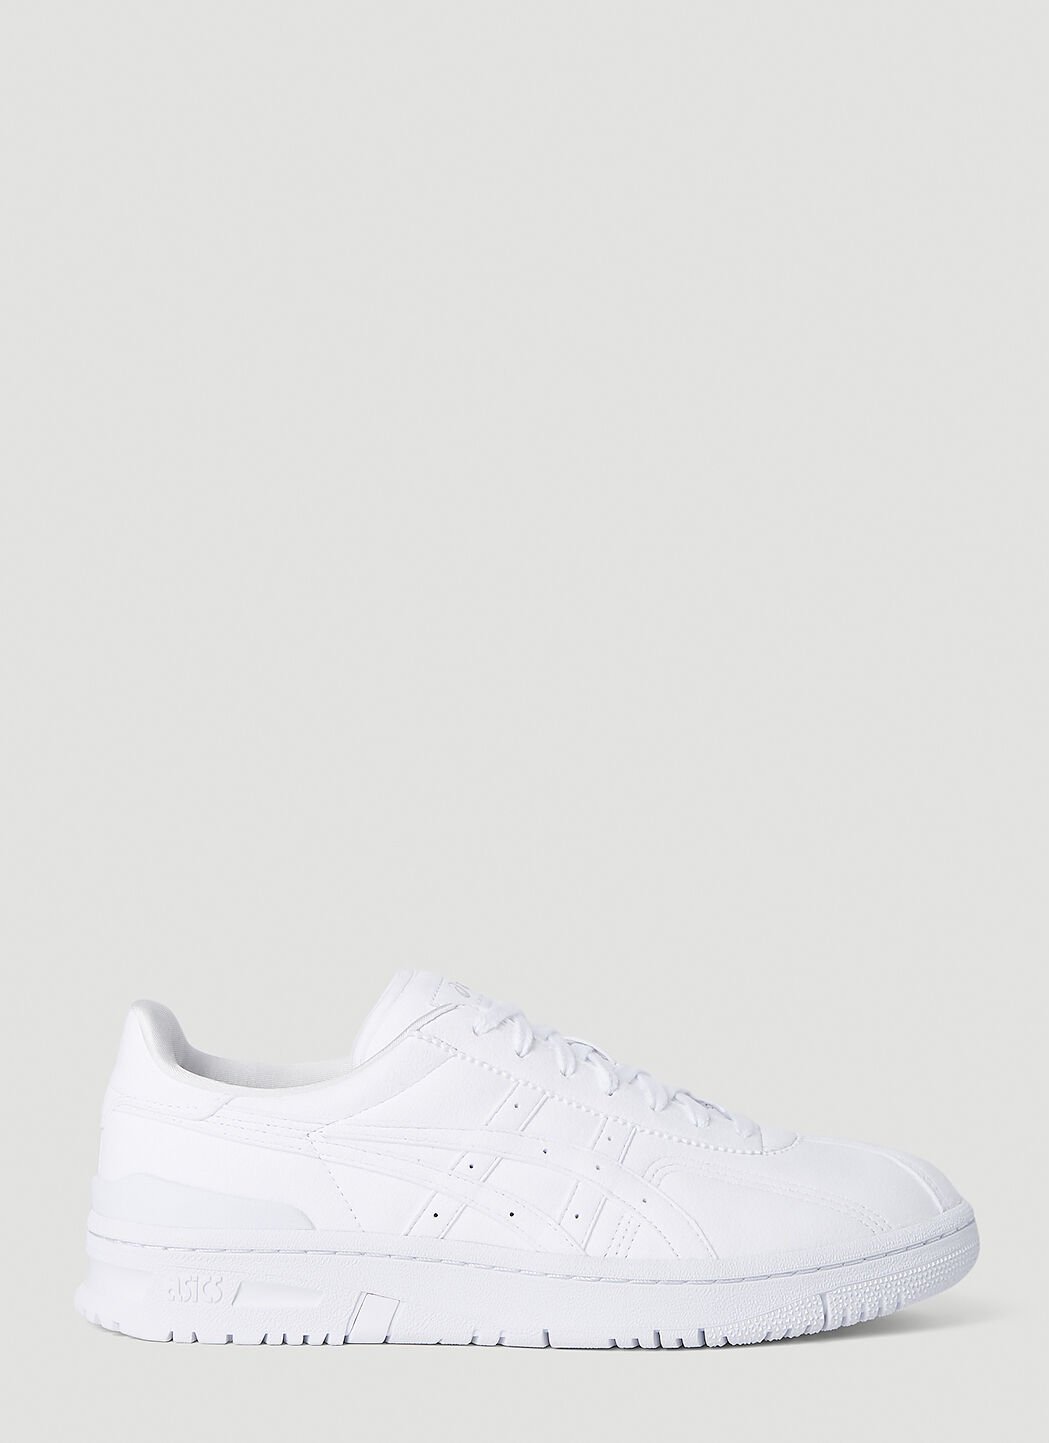 Comme des Garçons SHIRT x Asics 运动鞋 白色 cdg0156002